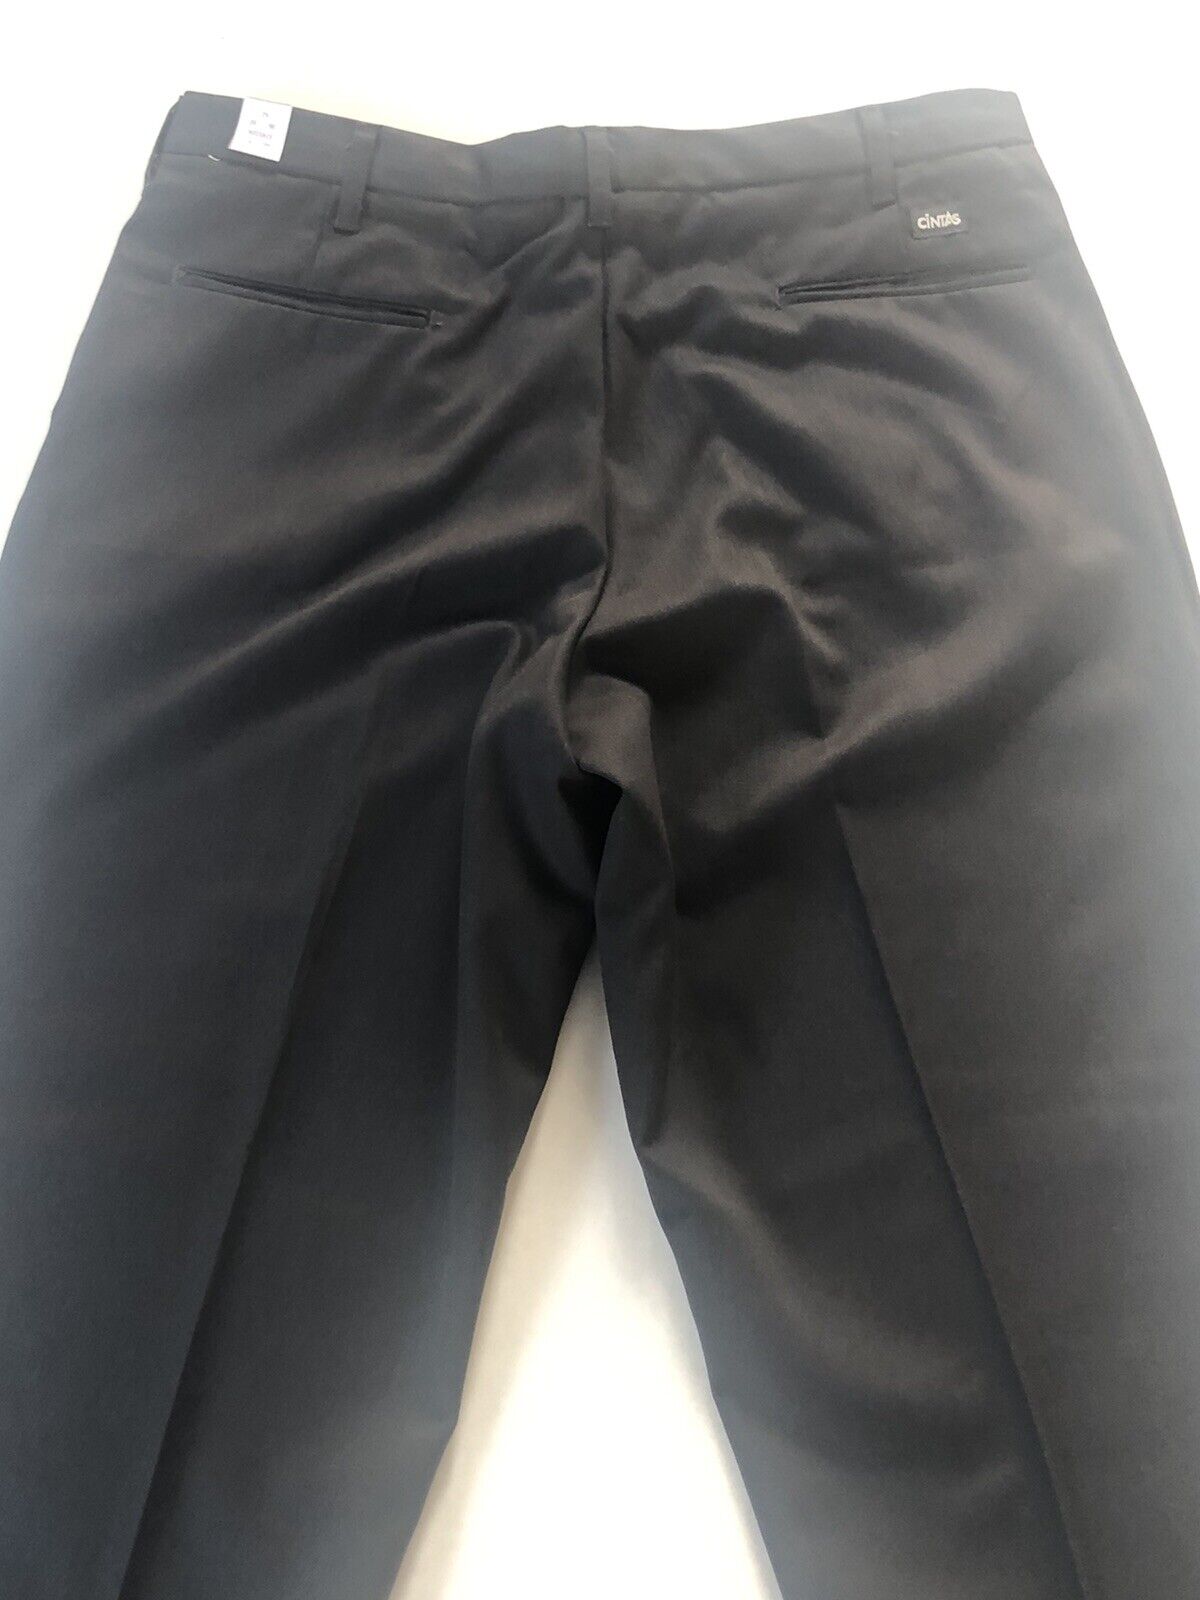 3 Cintas Comfort Flex Charcoal  Gray Work Pants Size 36x30 #945-33 cintas Does Not Apply - фотография #3